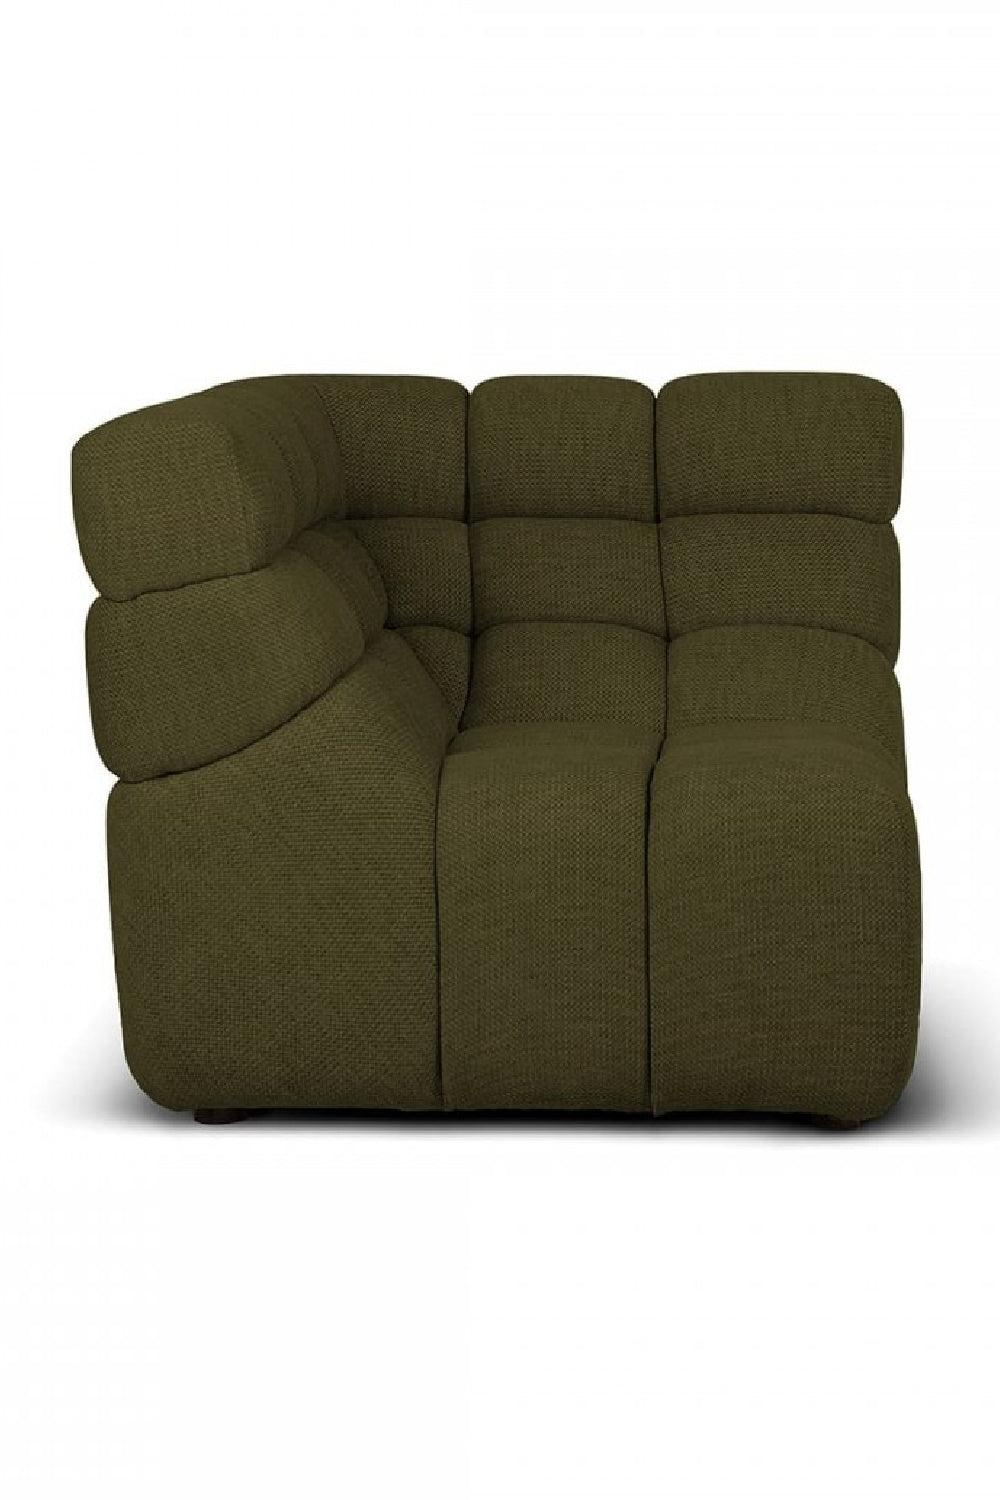 Green Quilted Sofa | Dareels Chopin | Woodfurniture.com 